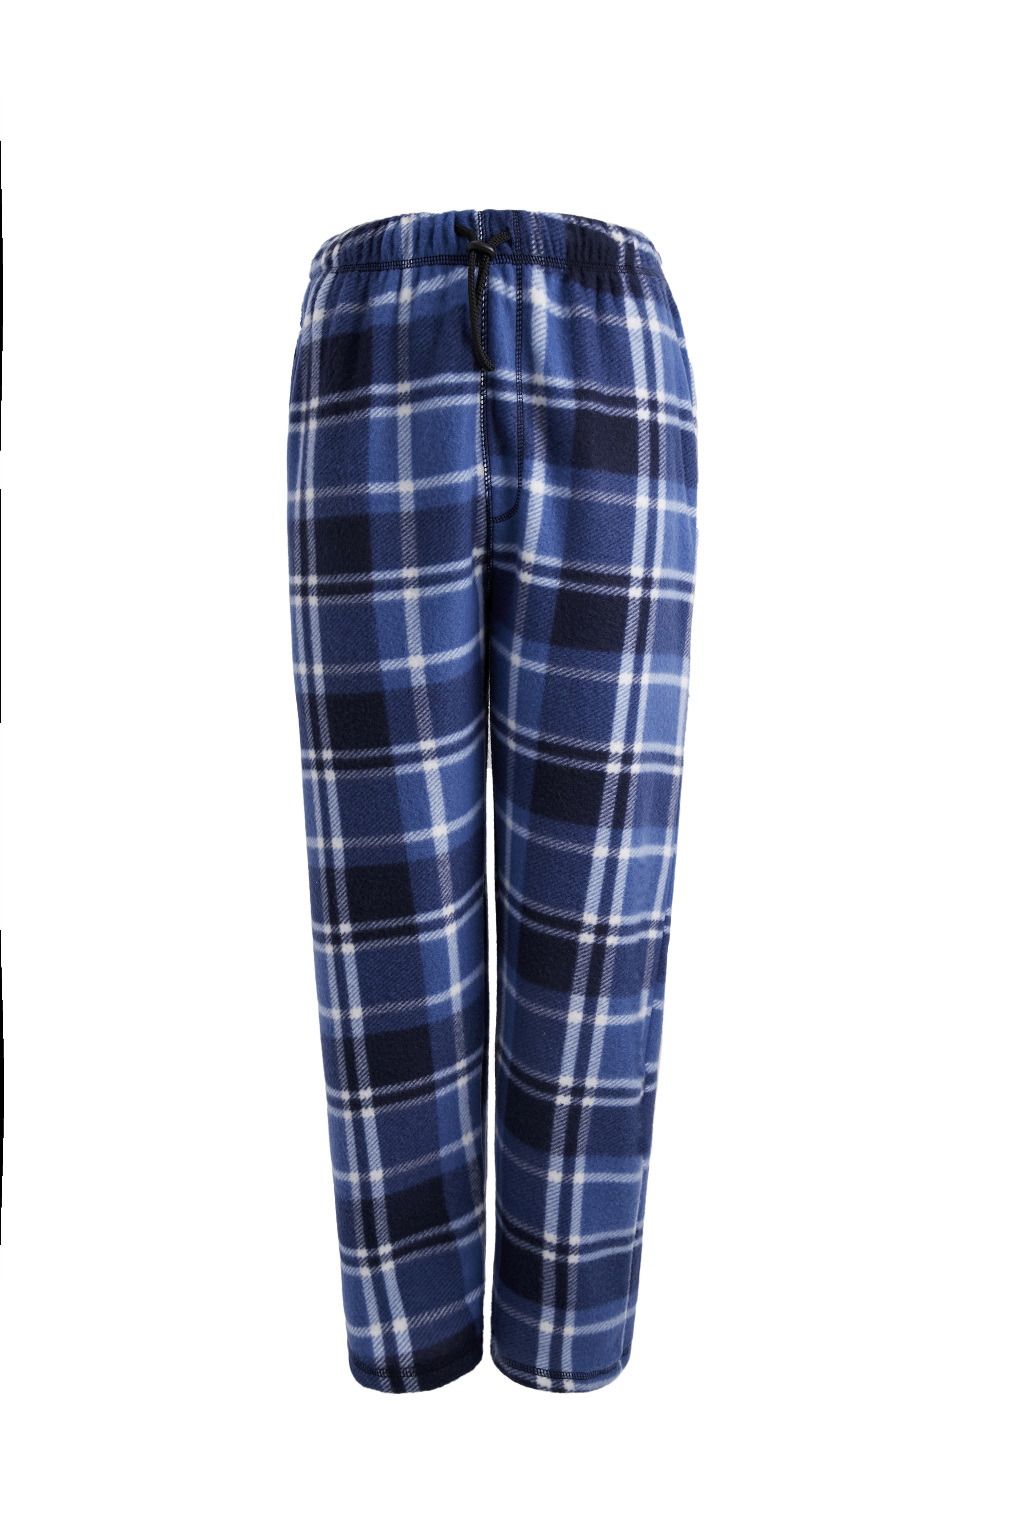 Men's Fleece Pajama Pants - 3X-5X, Blue Plaid